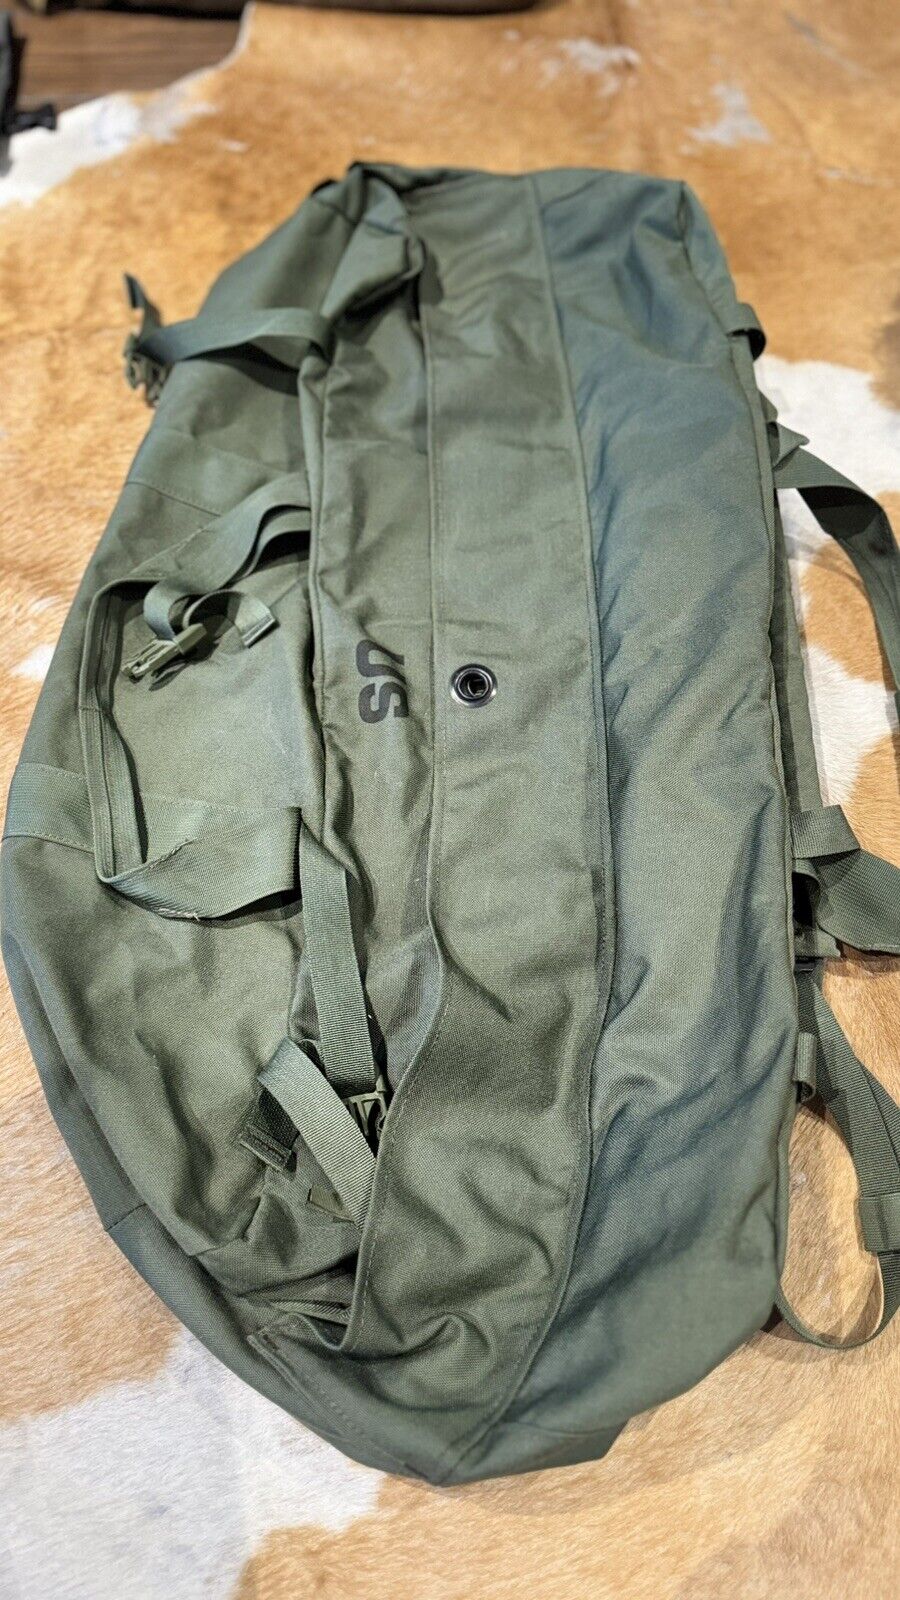 Genuine Military Improved Duffle Bag - US Army